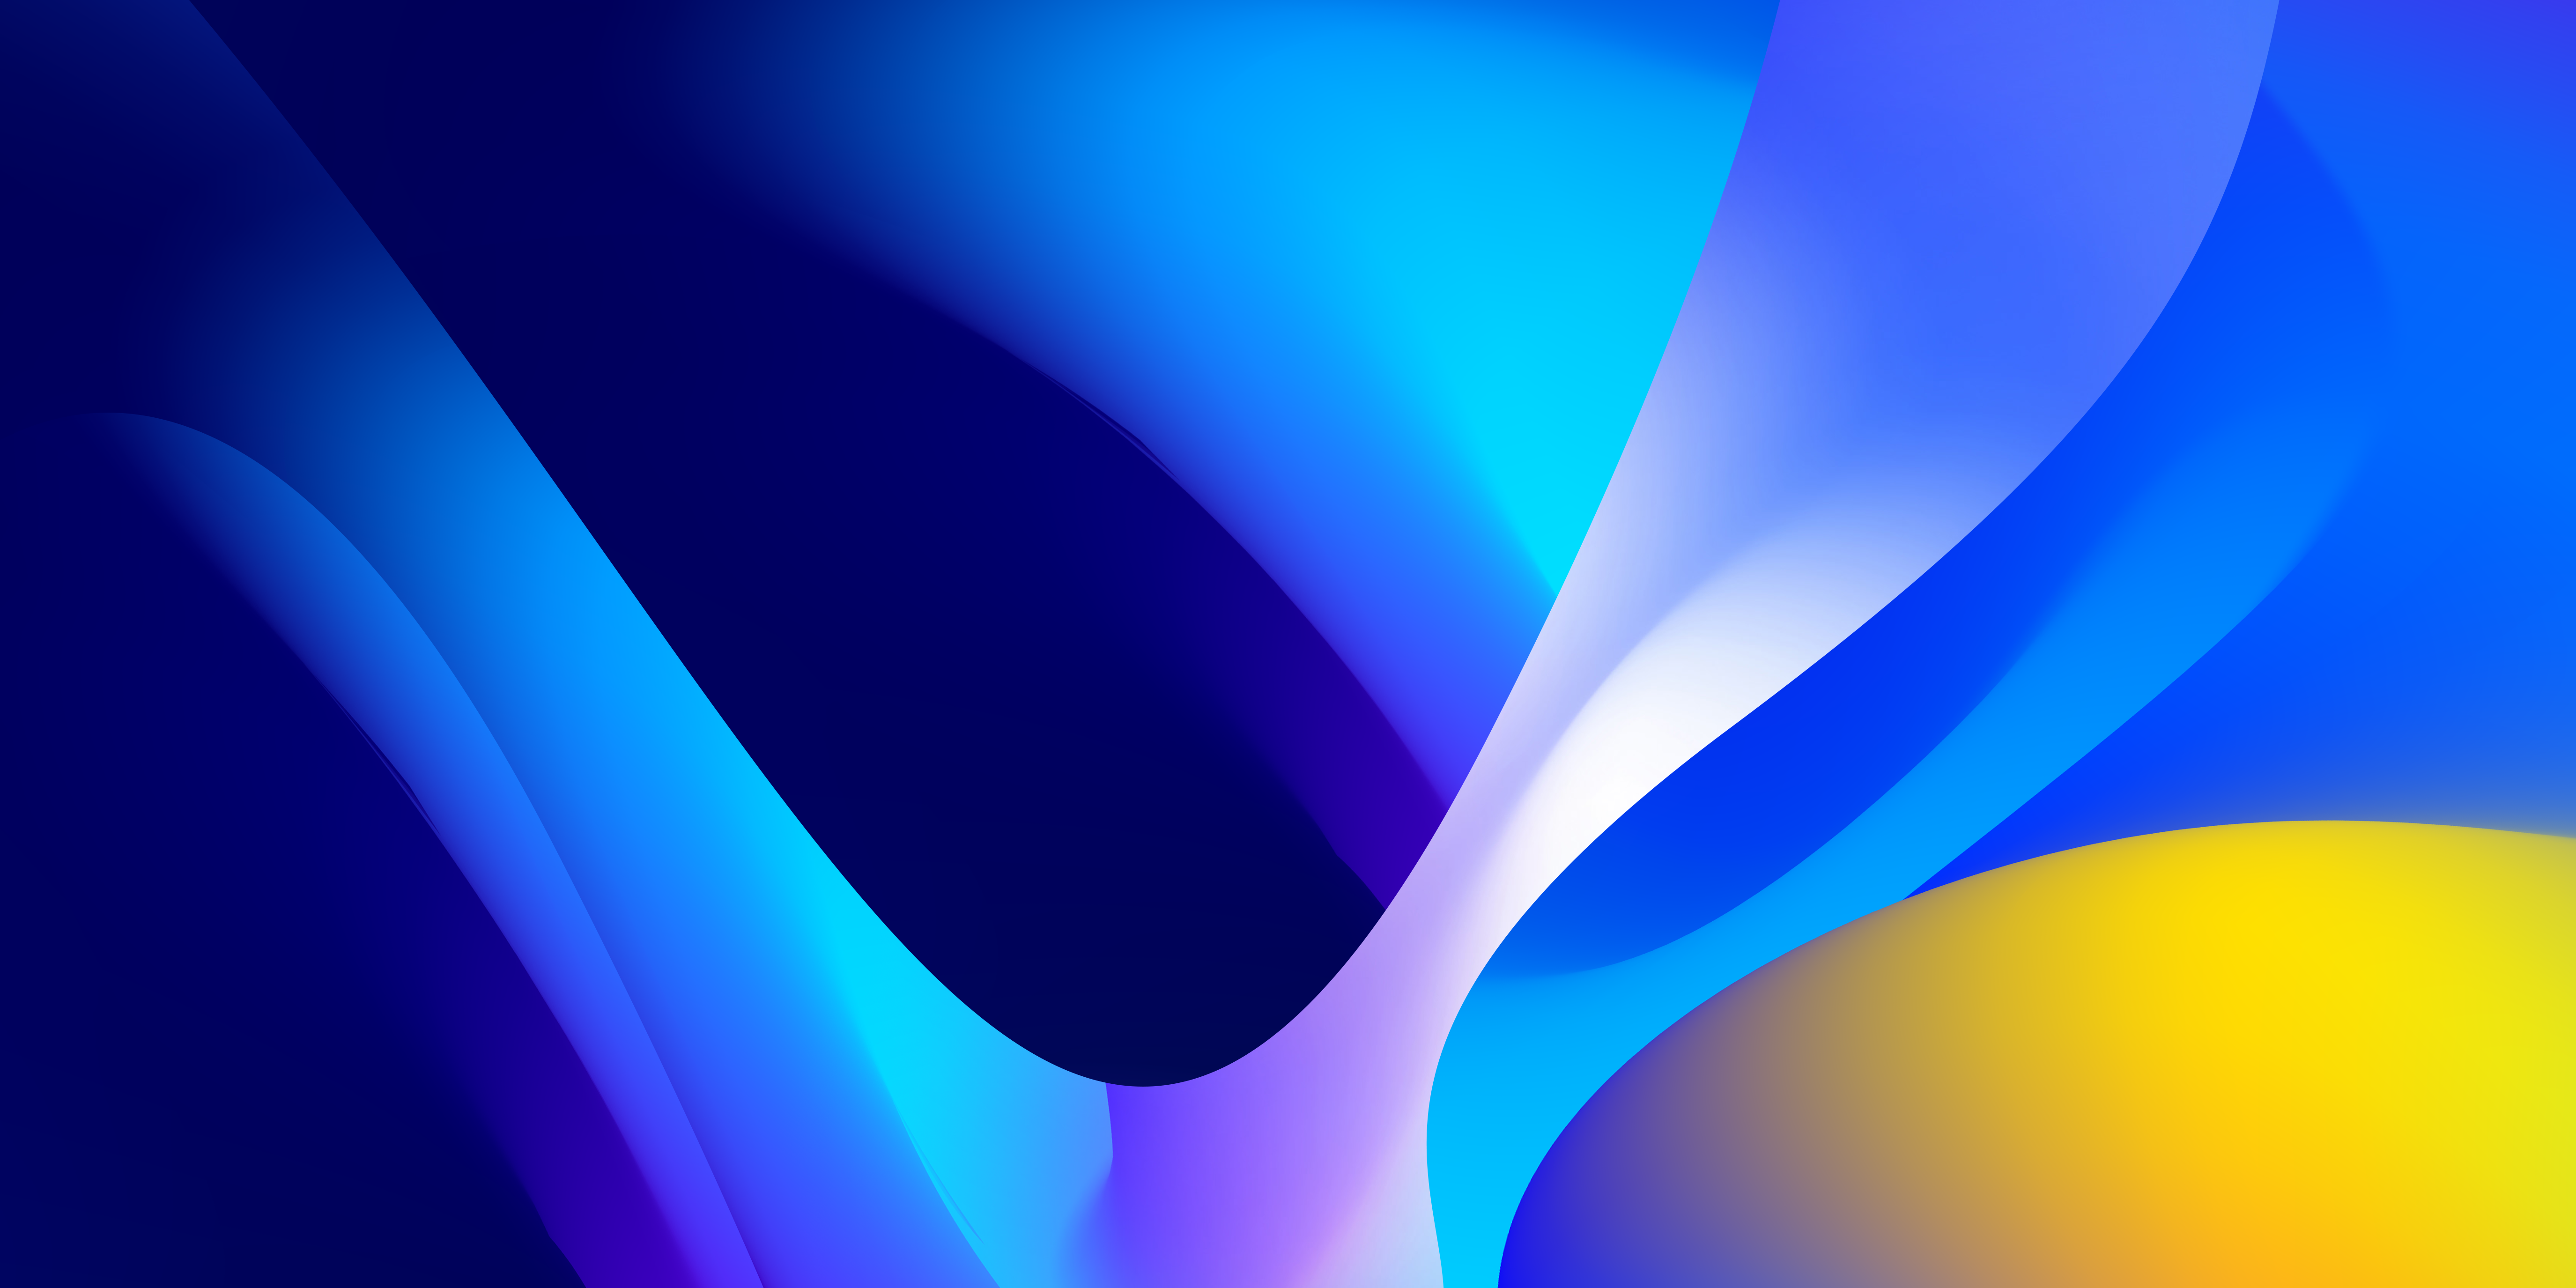 Blue background Vectors & Illustrations for Free Download | Freepik